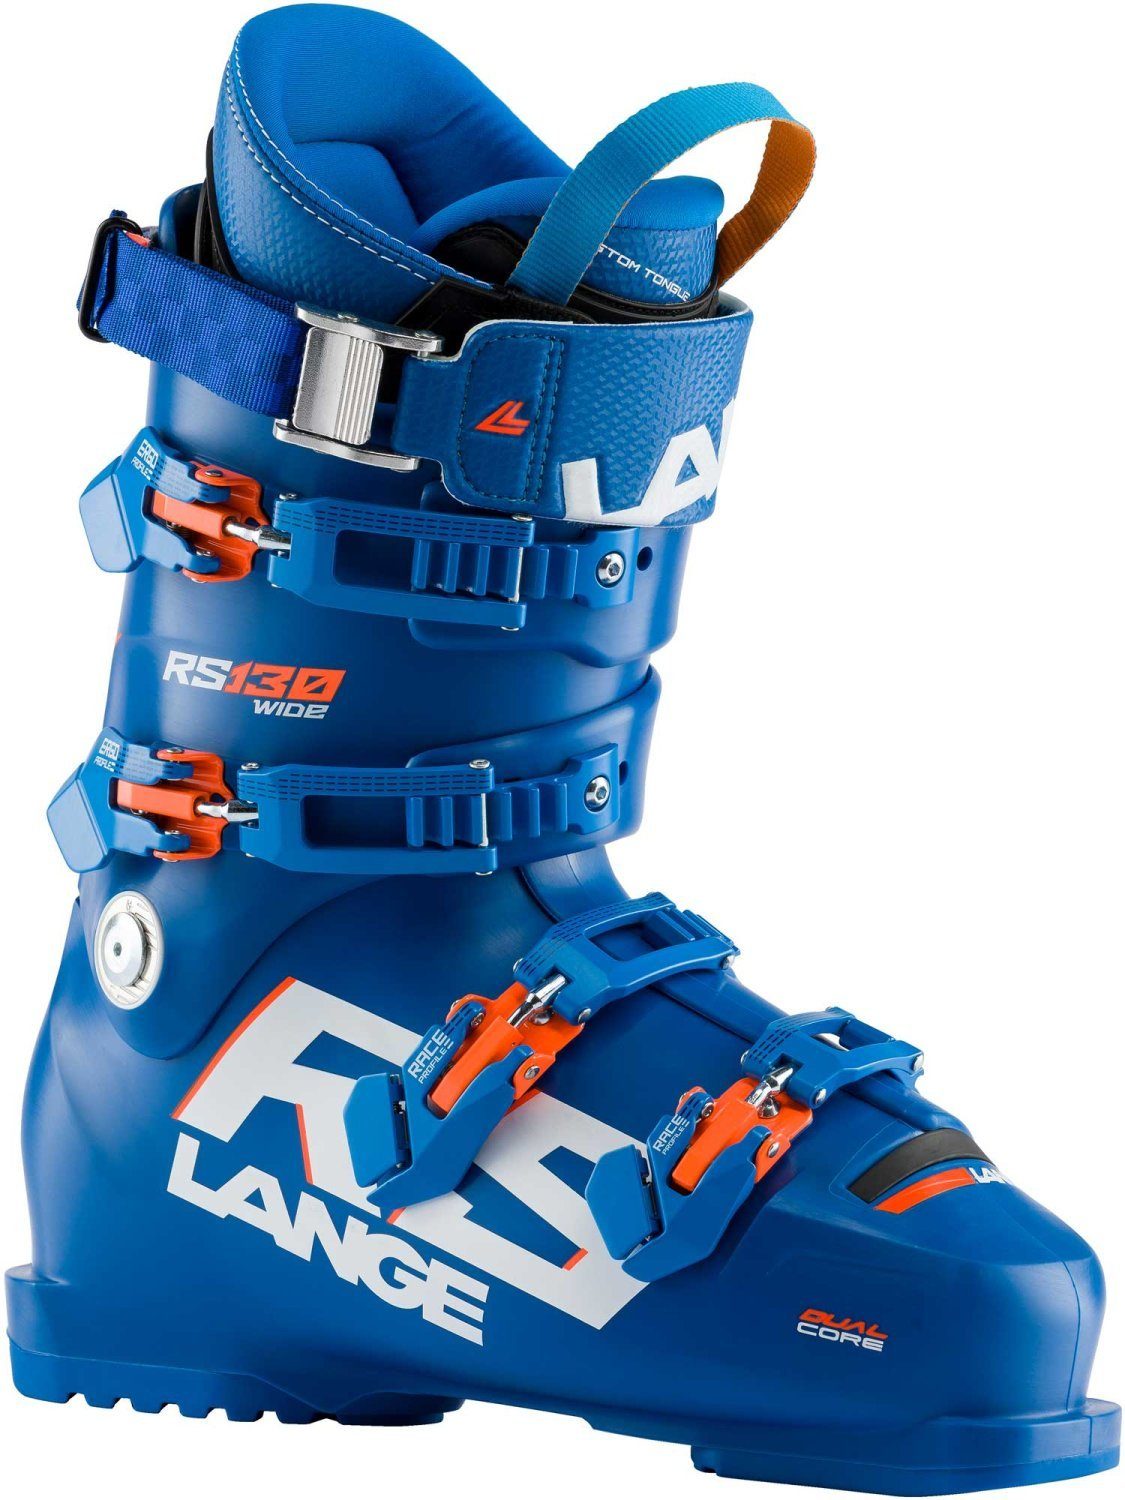 Sport Skischuhe Lange RS 130 WIDE (POWER BLUE) Skischuh